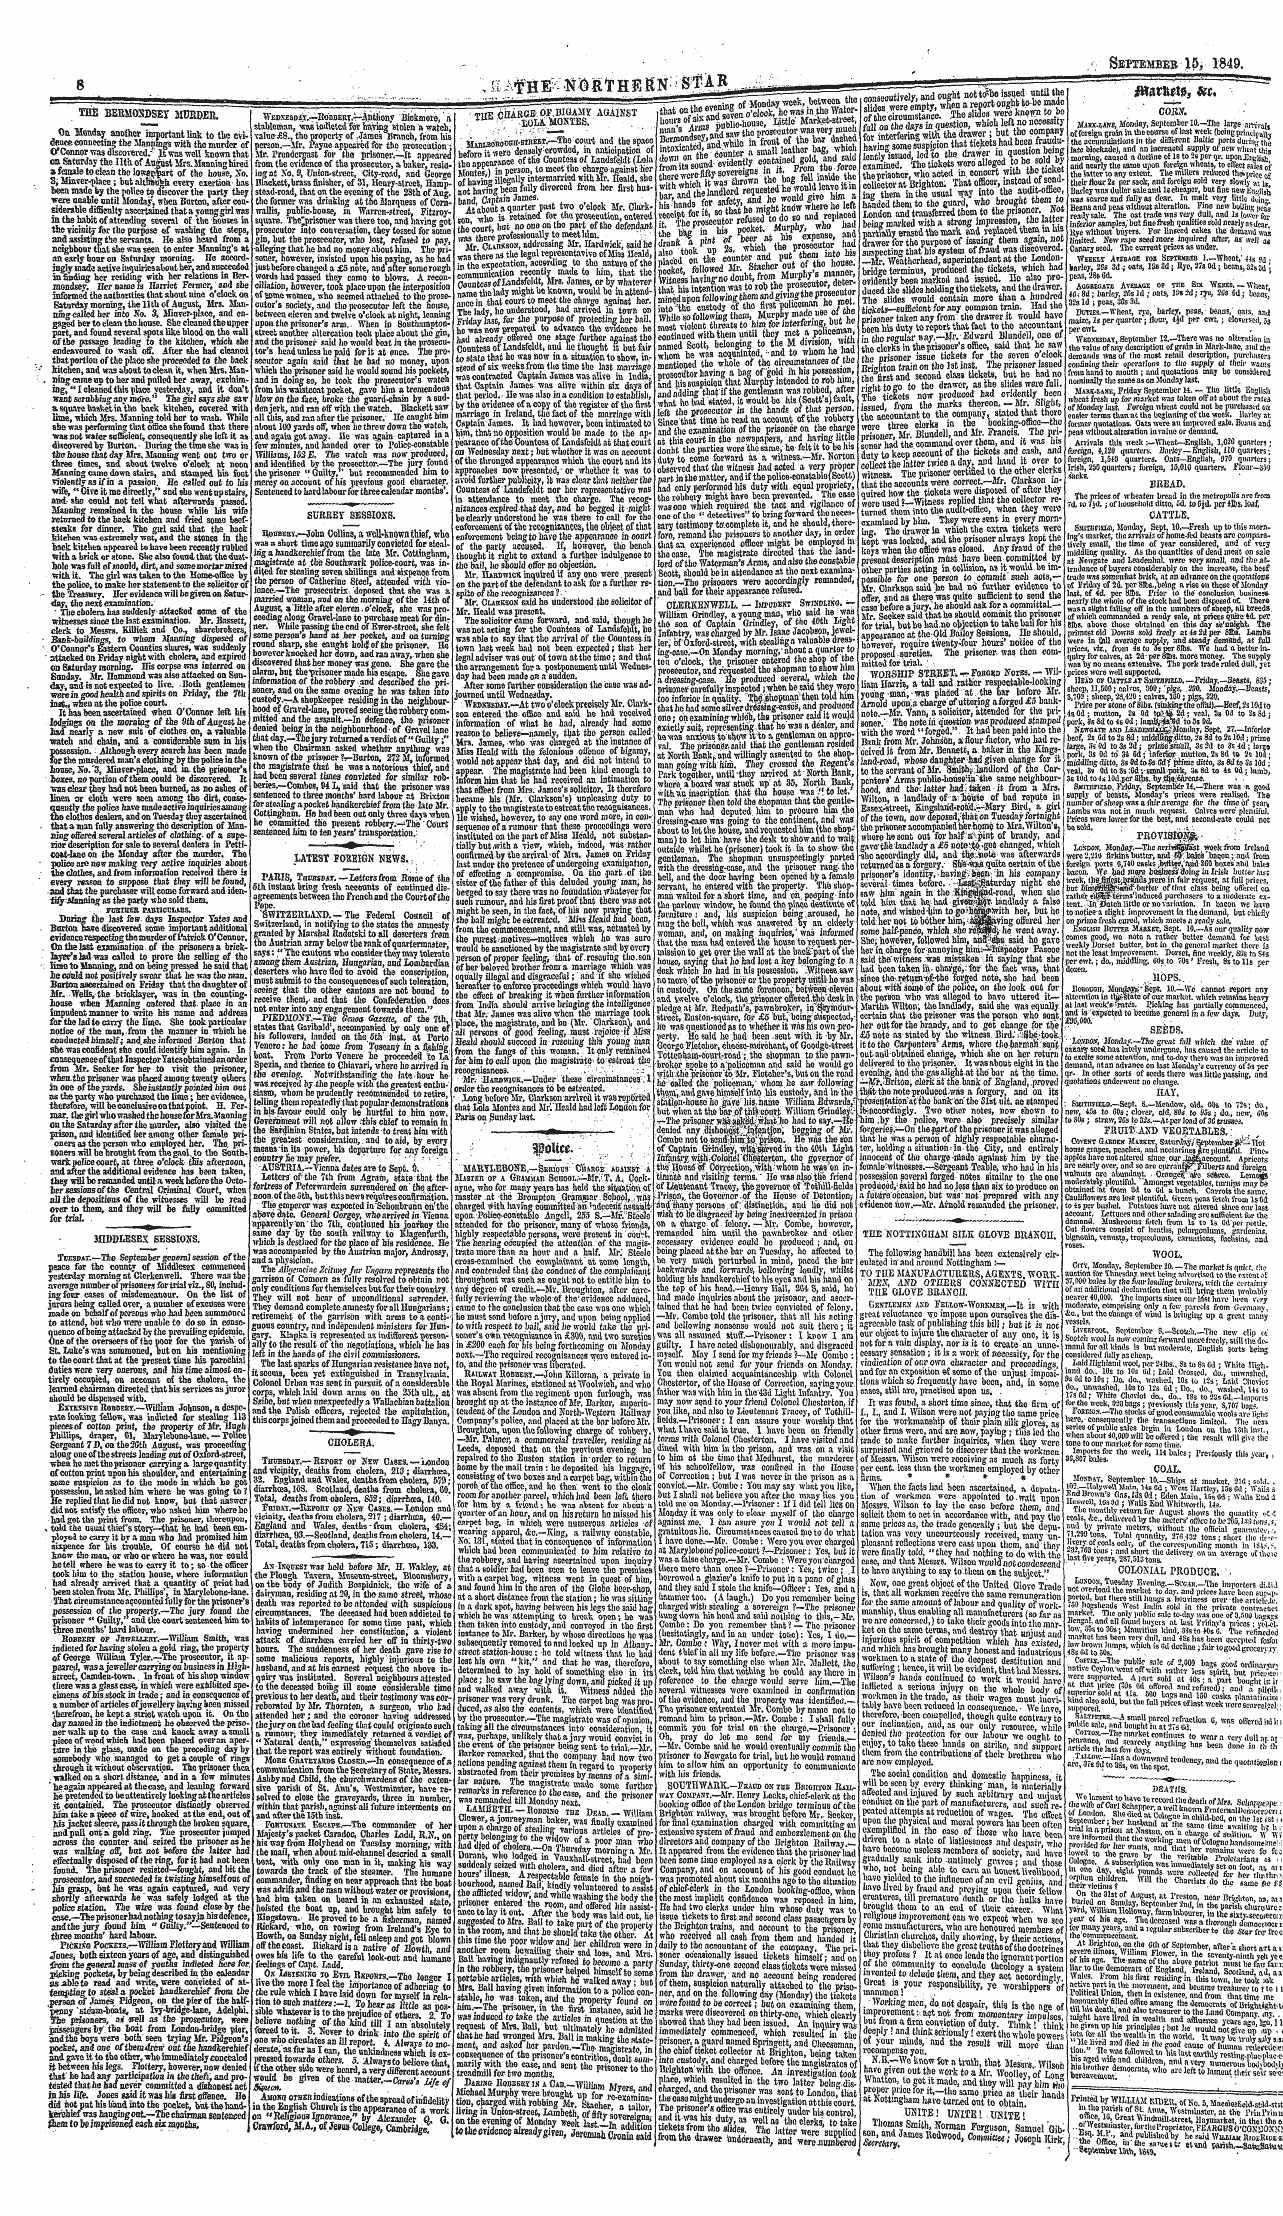 Northern Star (1837-1852): jS F Y, 3rd edition - O * Fier2w*T;, Fc * 1,,Mstcr ' At Thb Iw...